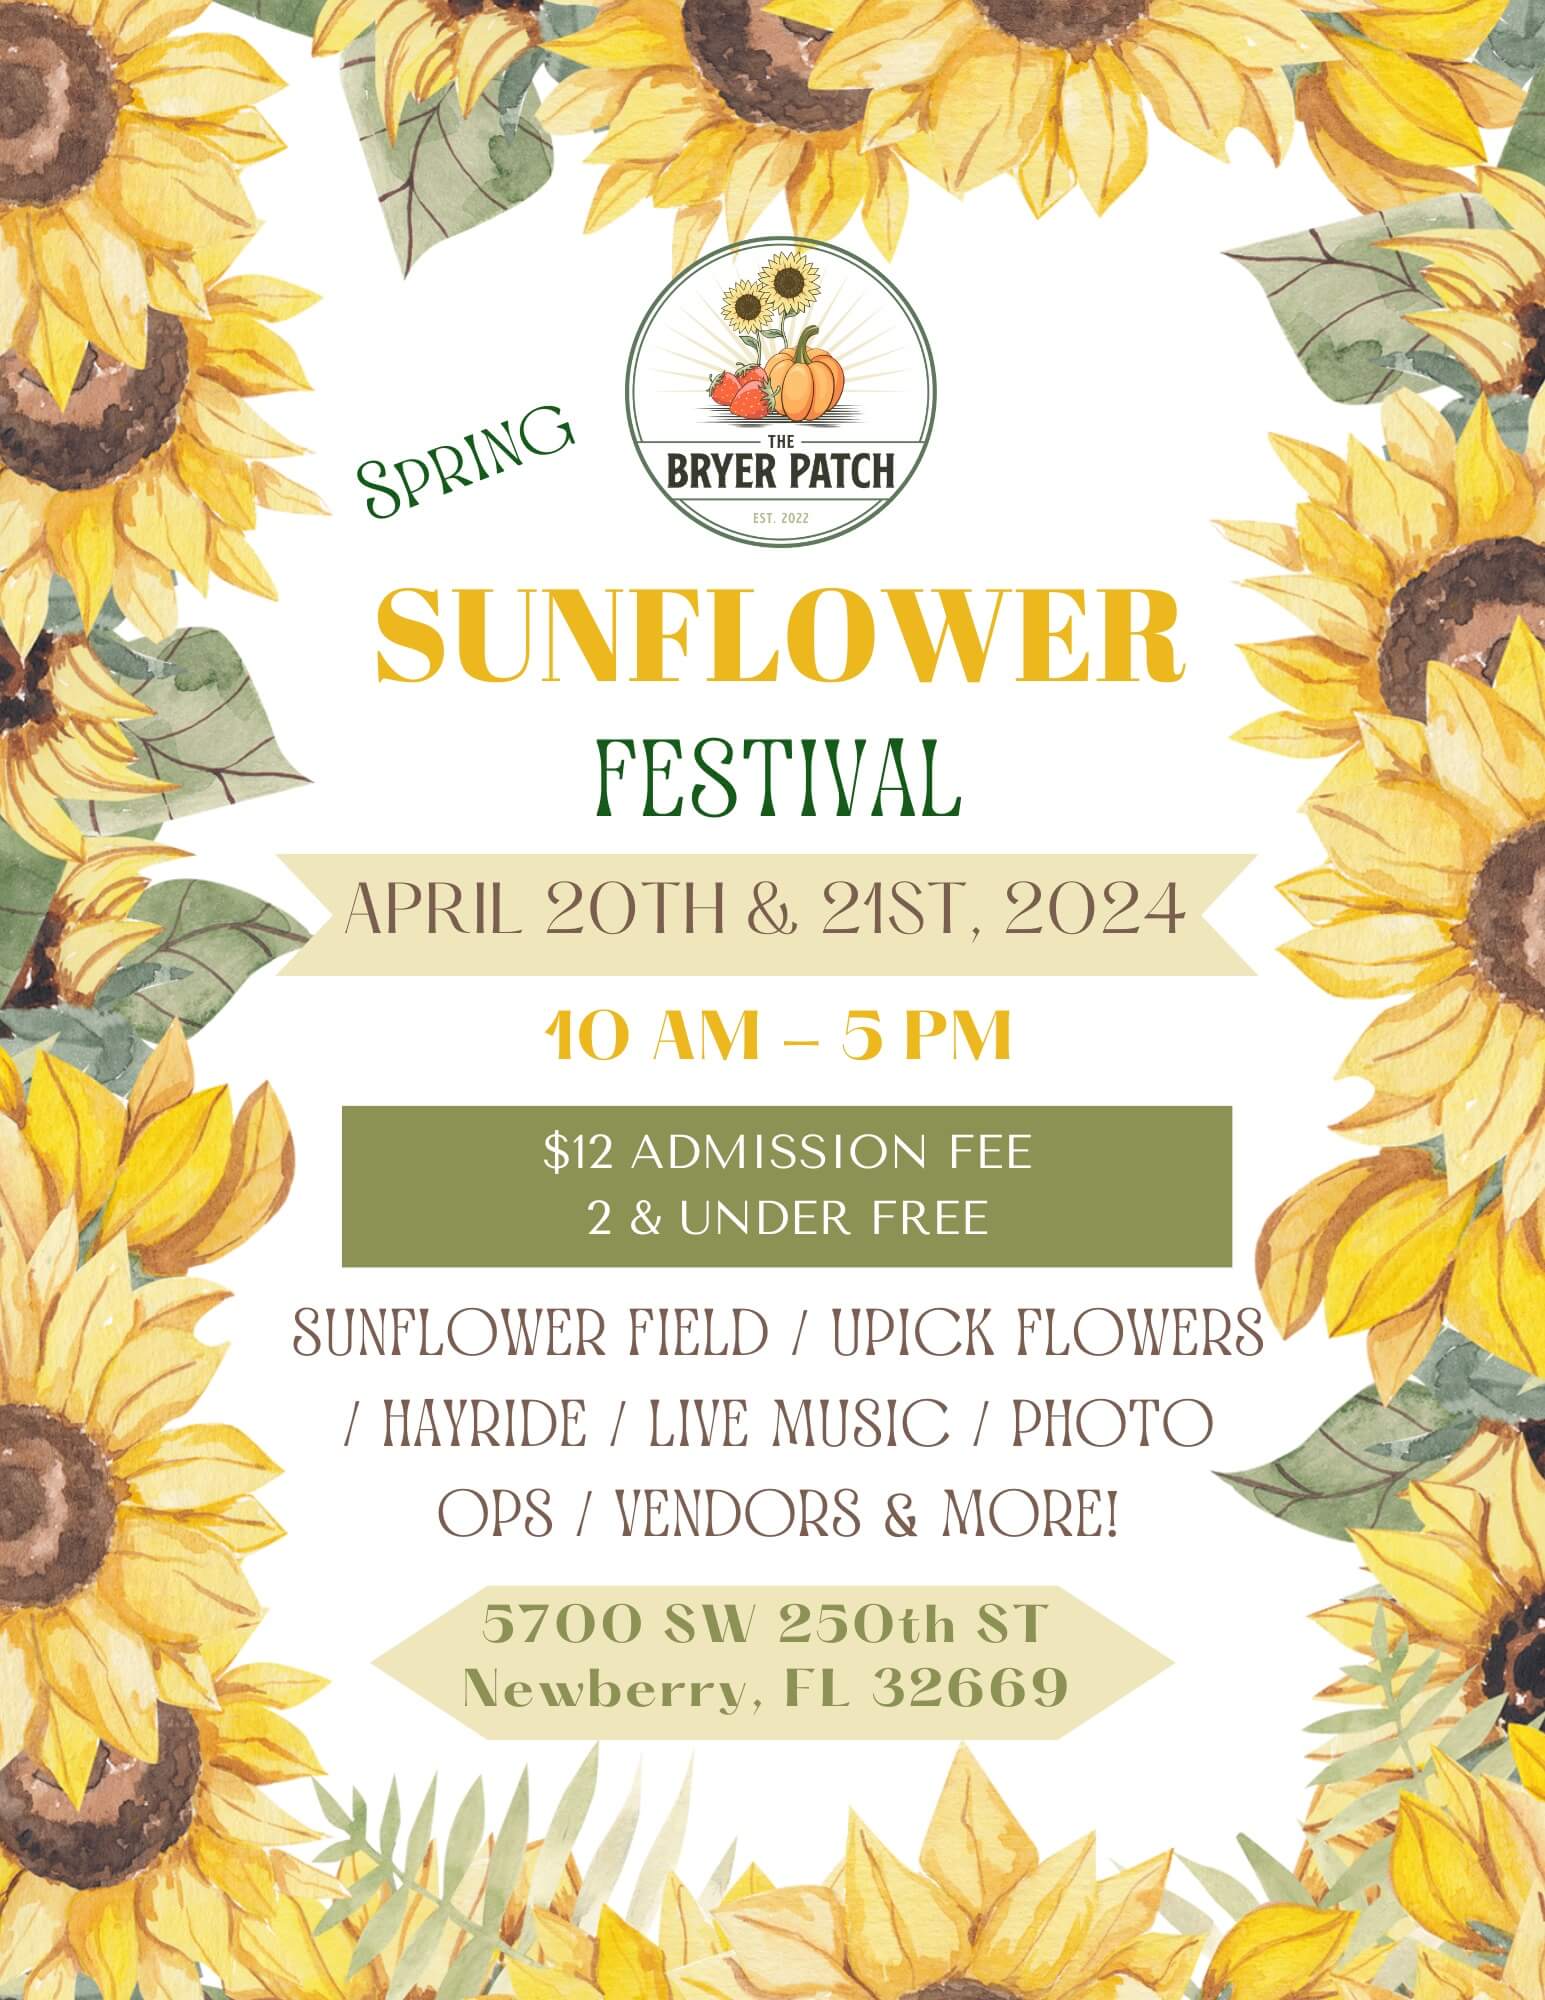 Spring Sunflower Fesstival Promotional Flyer